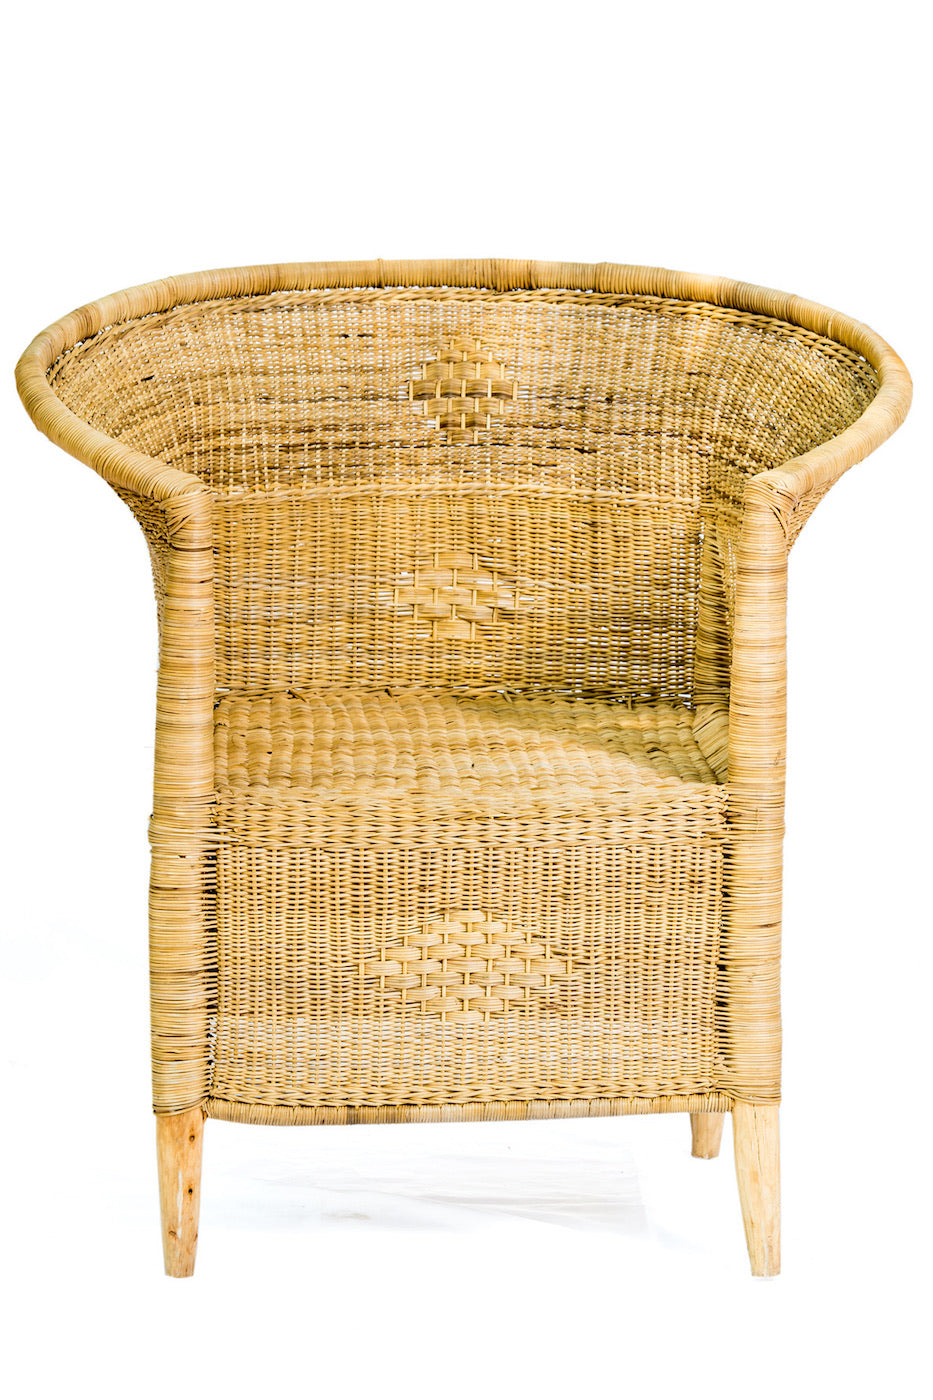 Malawi Full-Weave Cane Chair